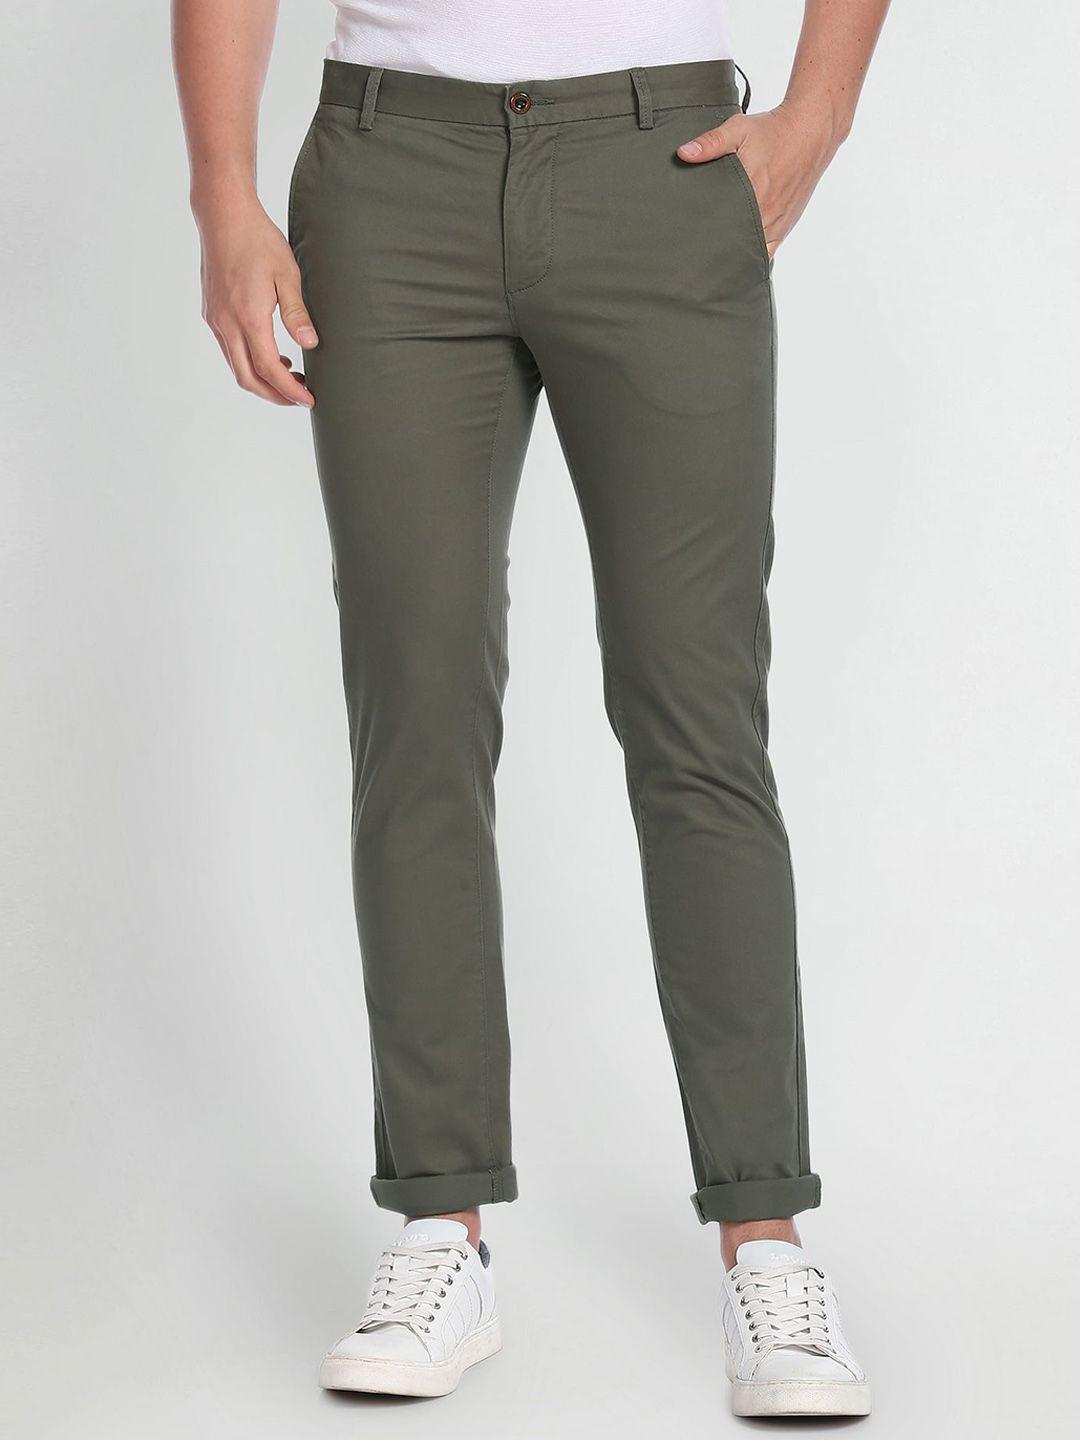 arrow-sport-men-slim-fit-low-rise-trousers